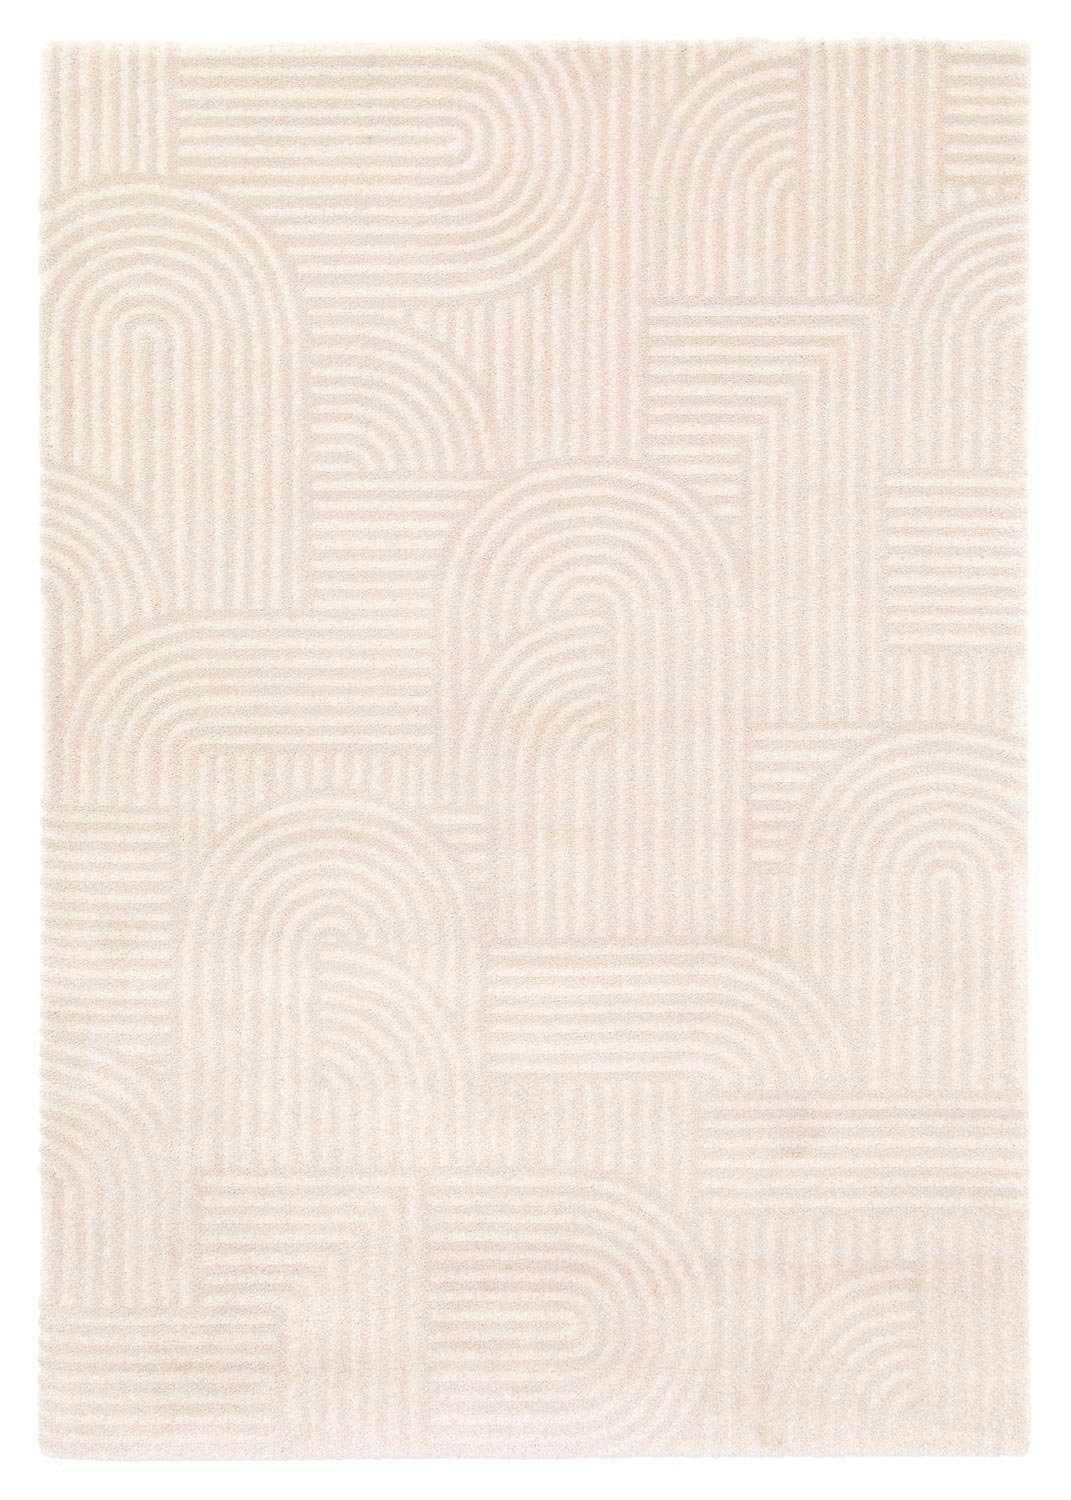 Teppich MOON, Polypropylen, Hellbeige, 120 x 170 cm, Balta Rugs, rechteckig, Höhe: 17 mm | Kurzflor-Teppiche